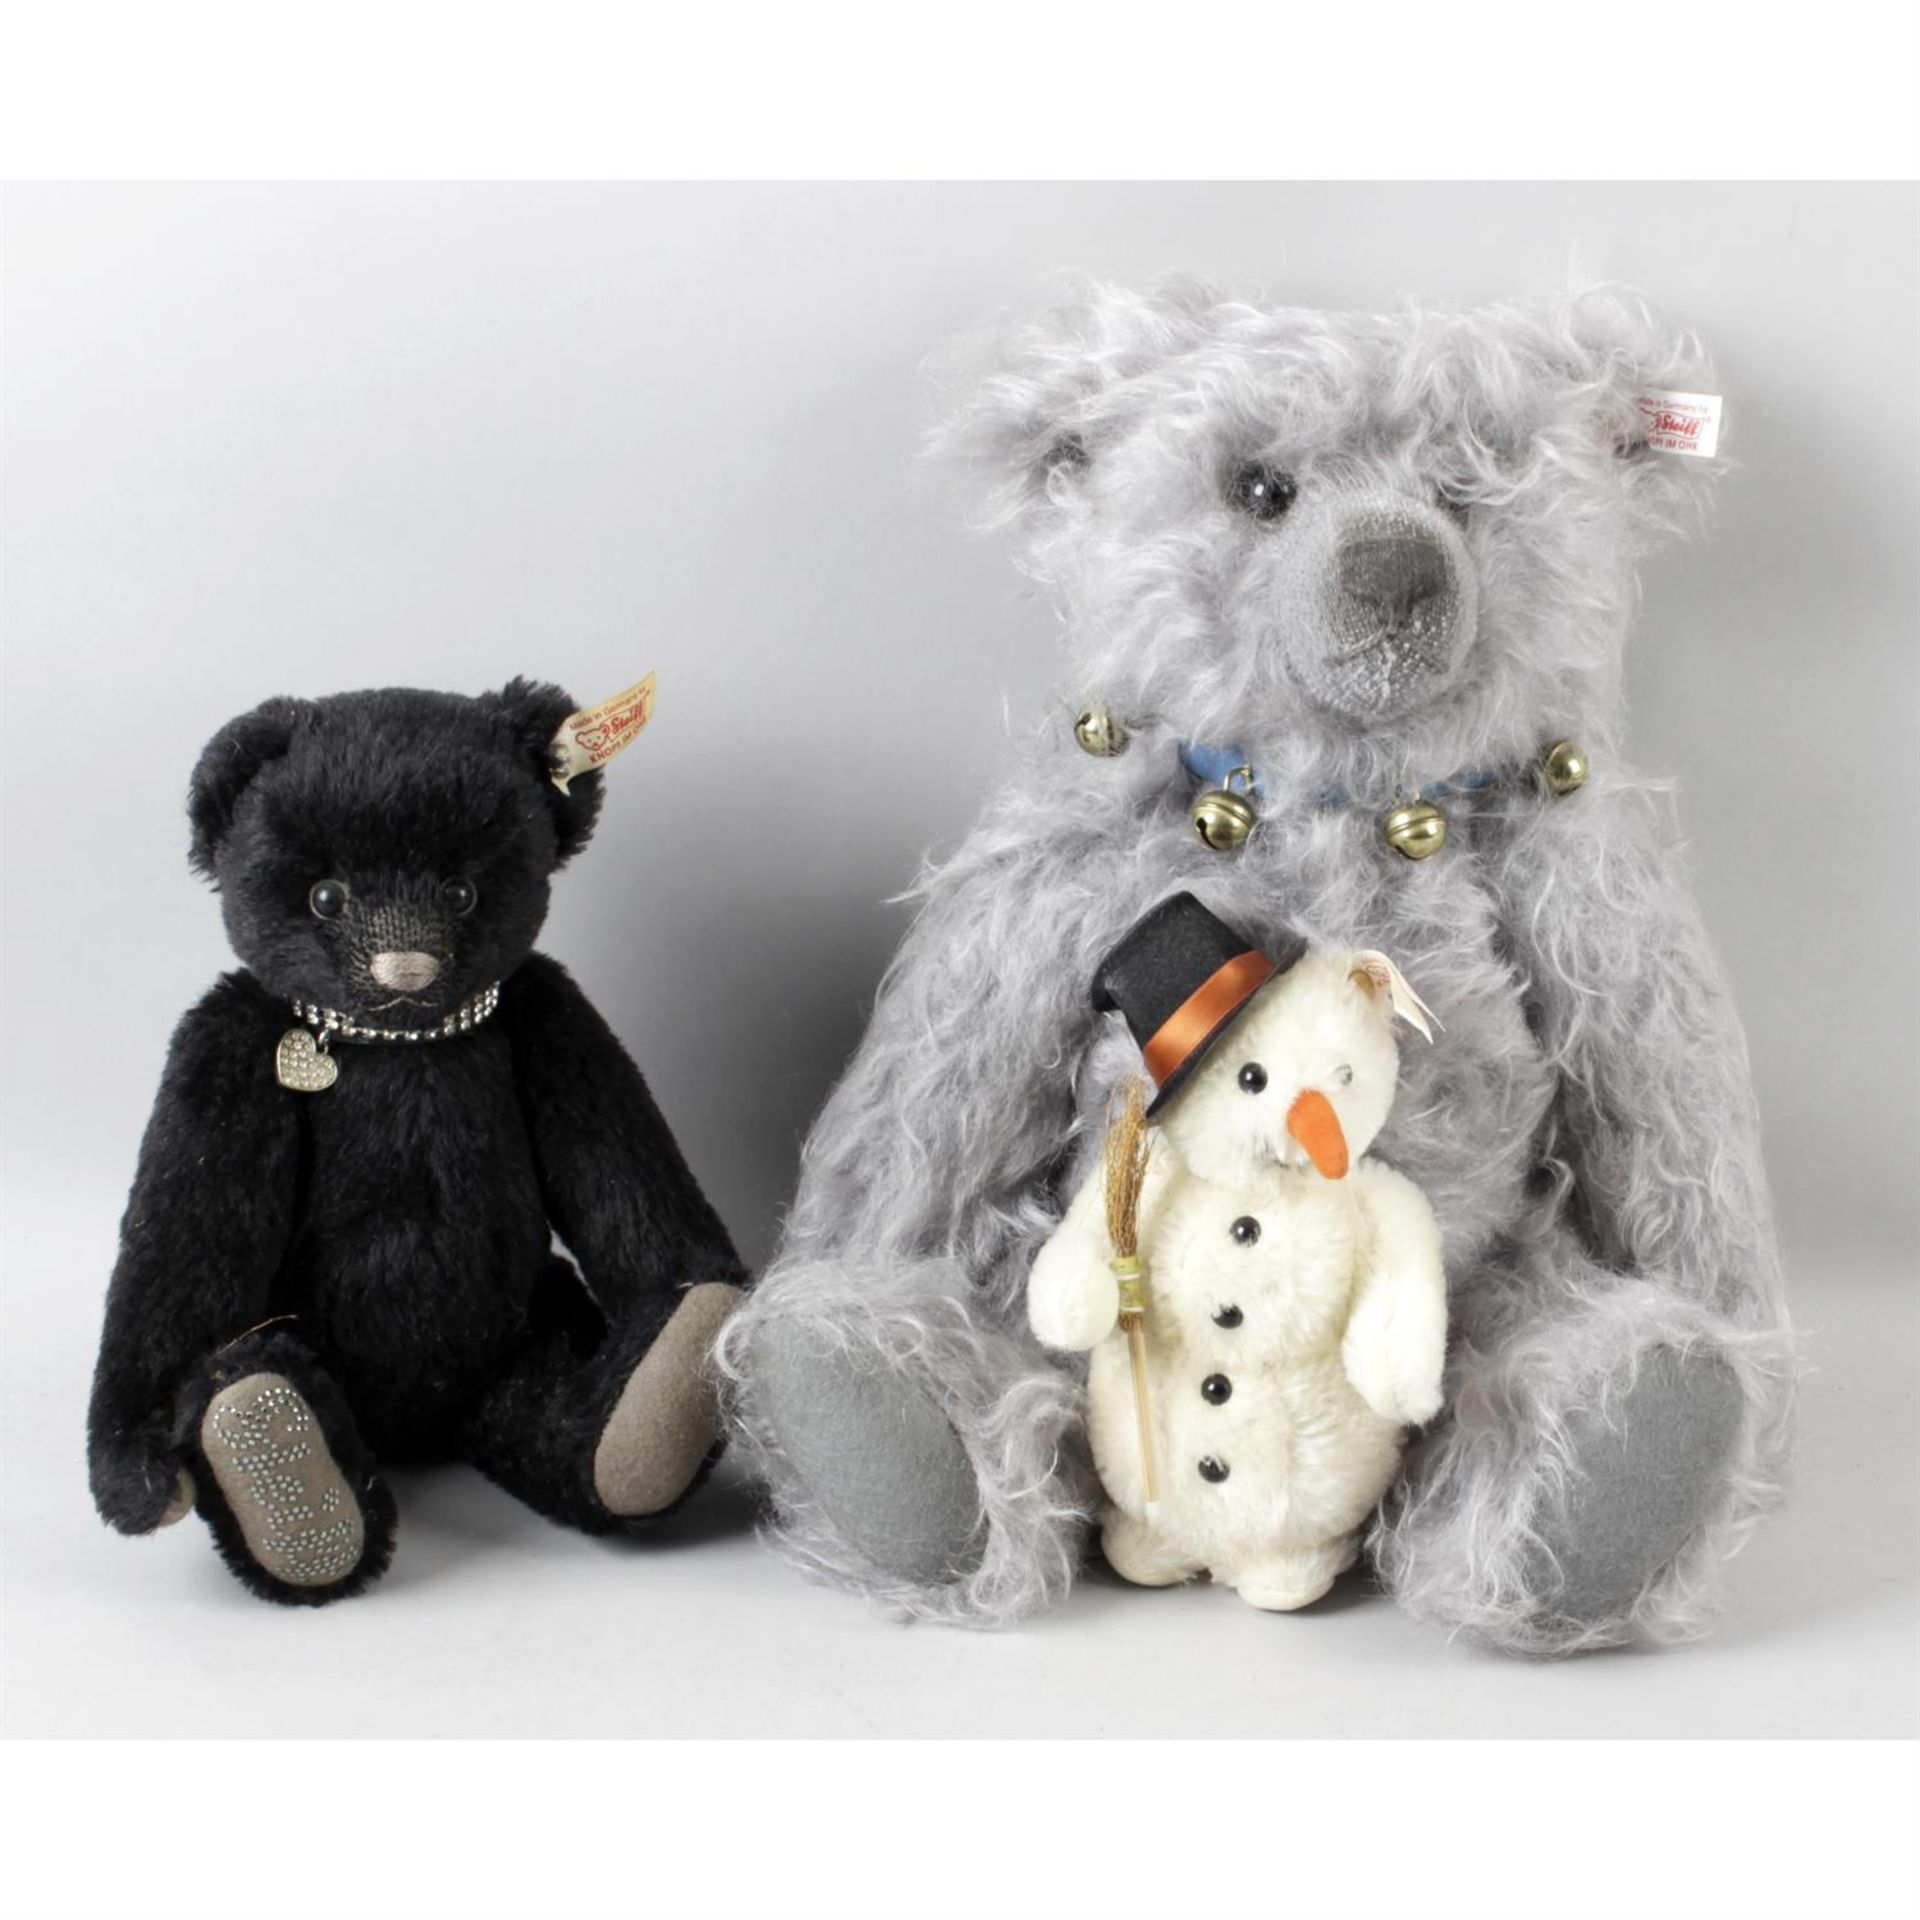 A Steiff Limited Edition 'Bell Boy' teddy bear, a Steiff Limited Edition 'Krystina' teddy bear and